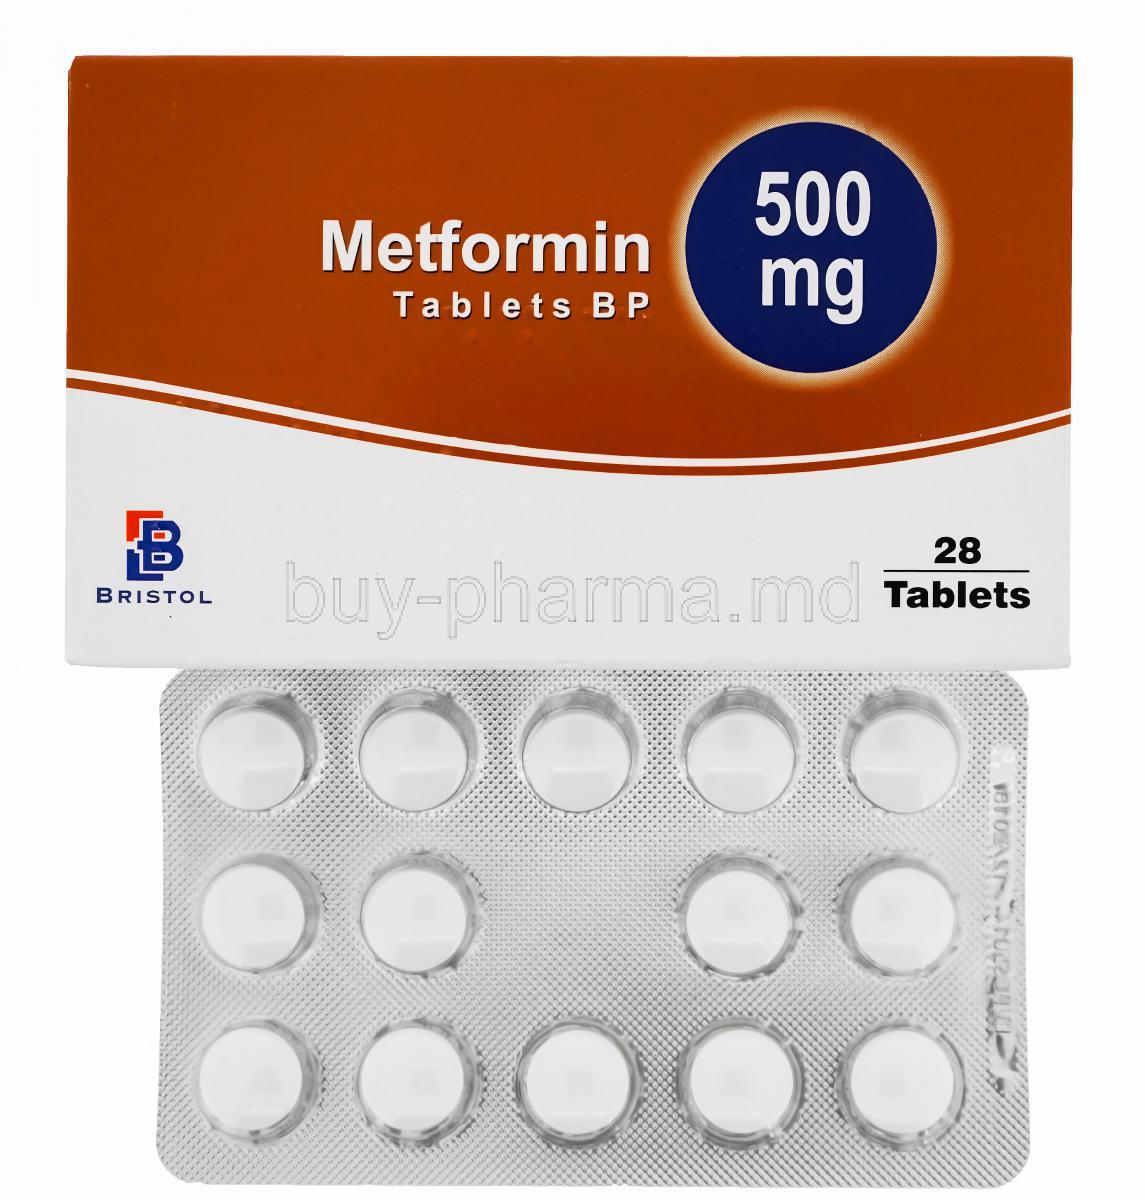 Generic Glucophage, Metformin Tablet, 500mg 28 tablets, Box front presentation with blister pack, Birstol